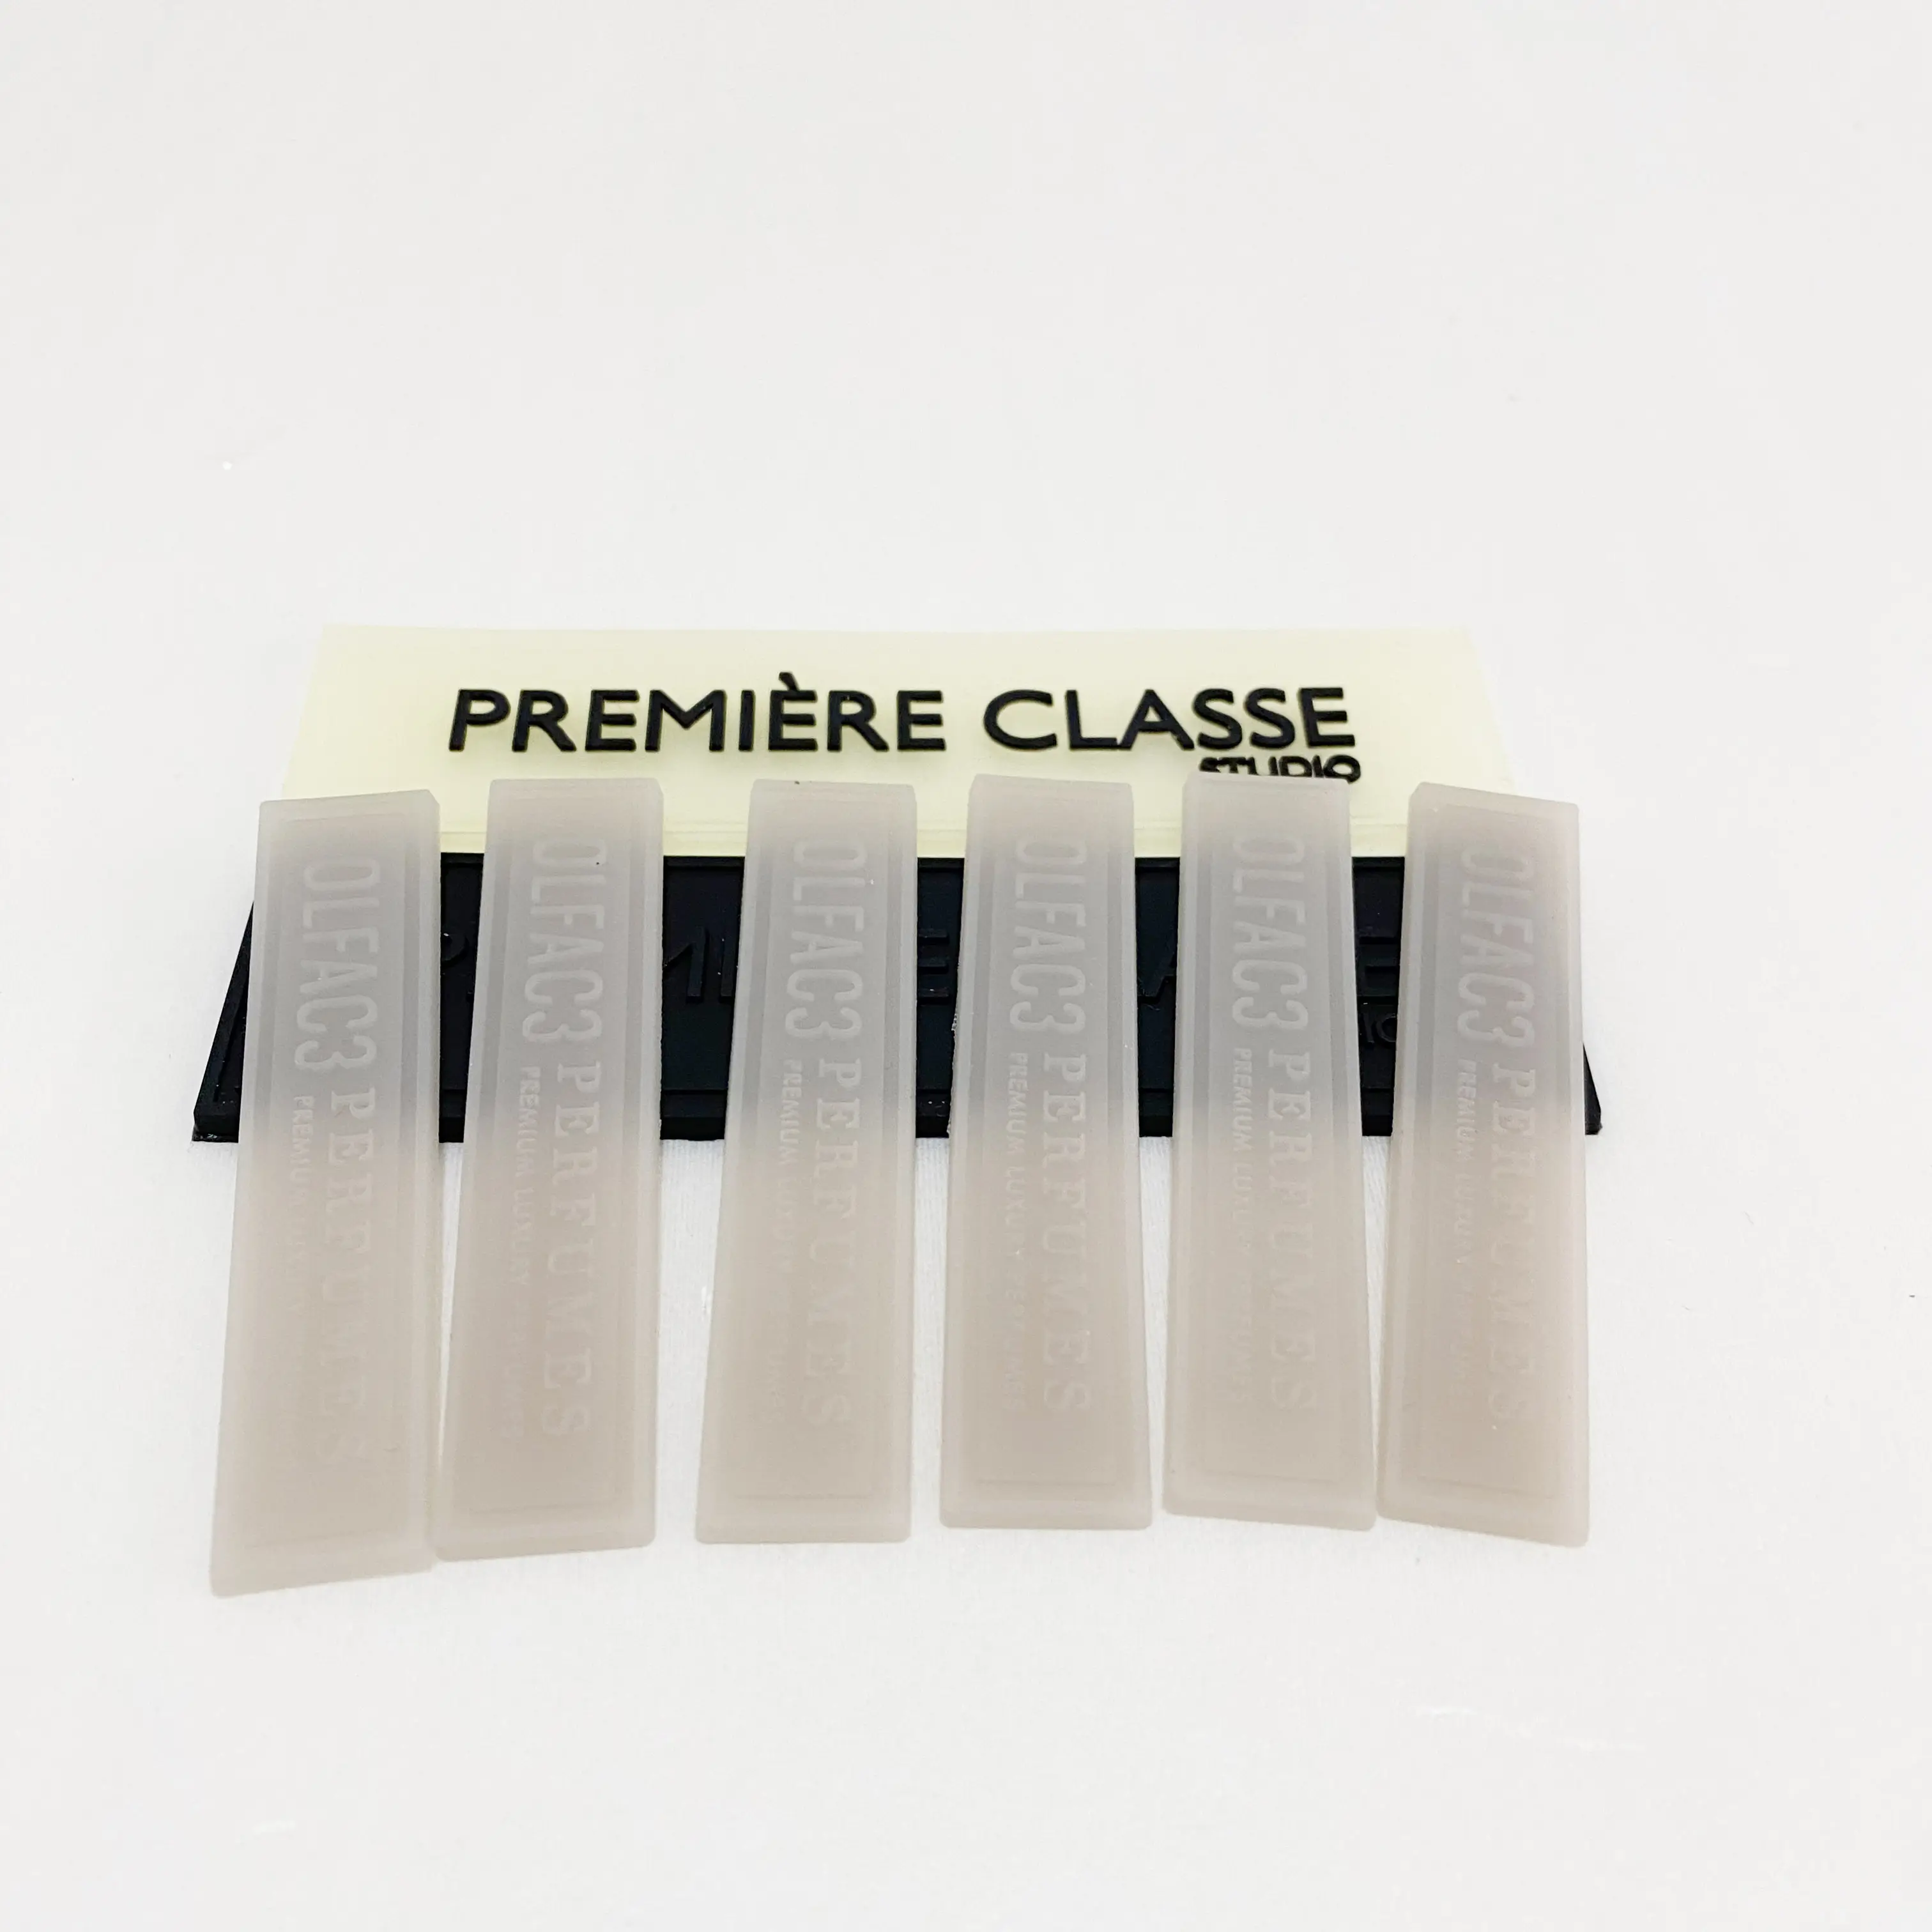 Individuelle 2D 3D PVC Gummi weiche PVC-Patches Emblem applikative dekorative Patches Abzeichen für Rucksack Kleidung